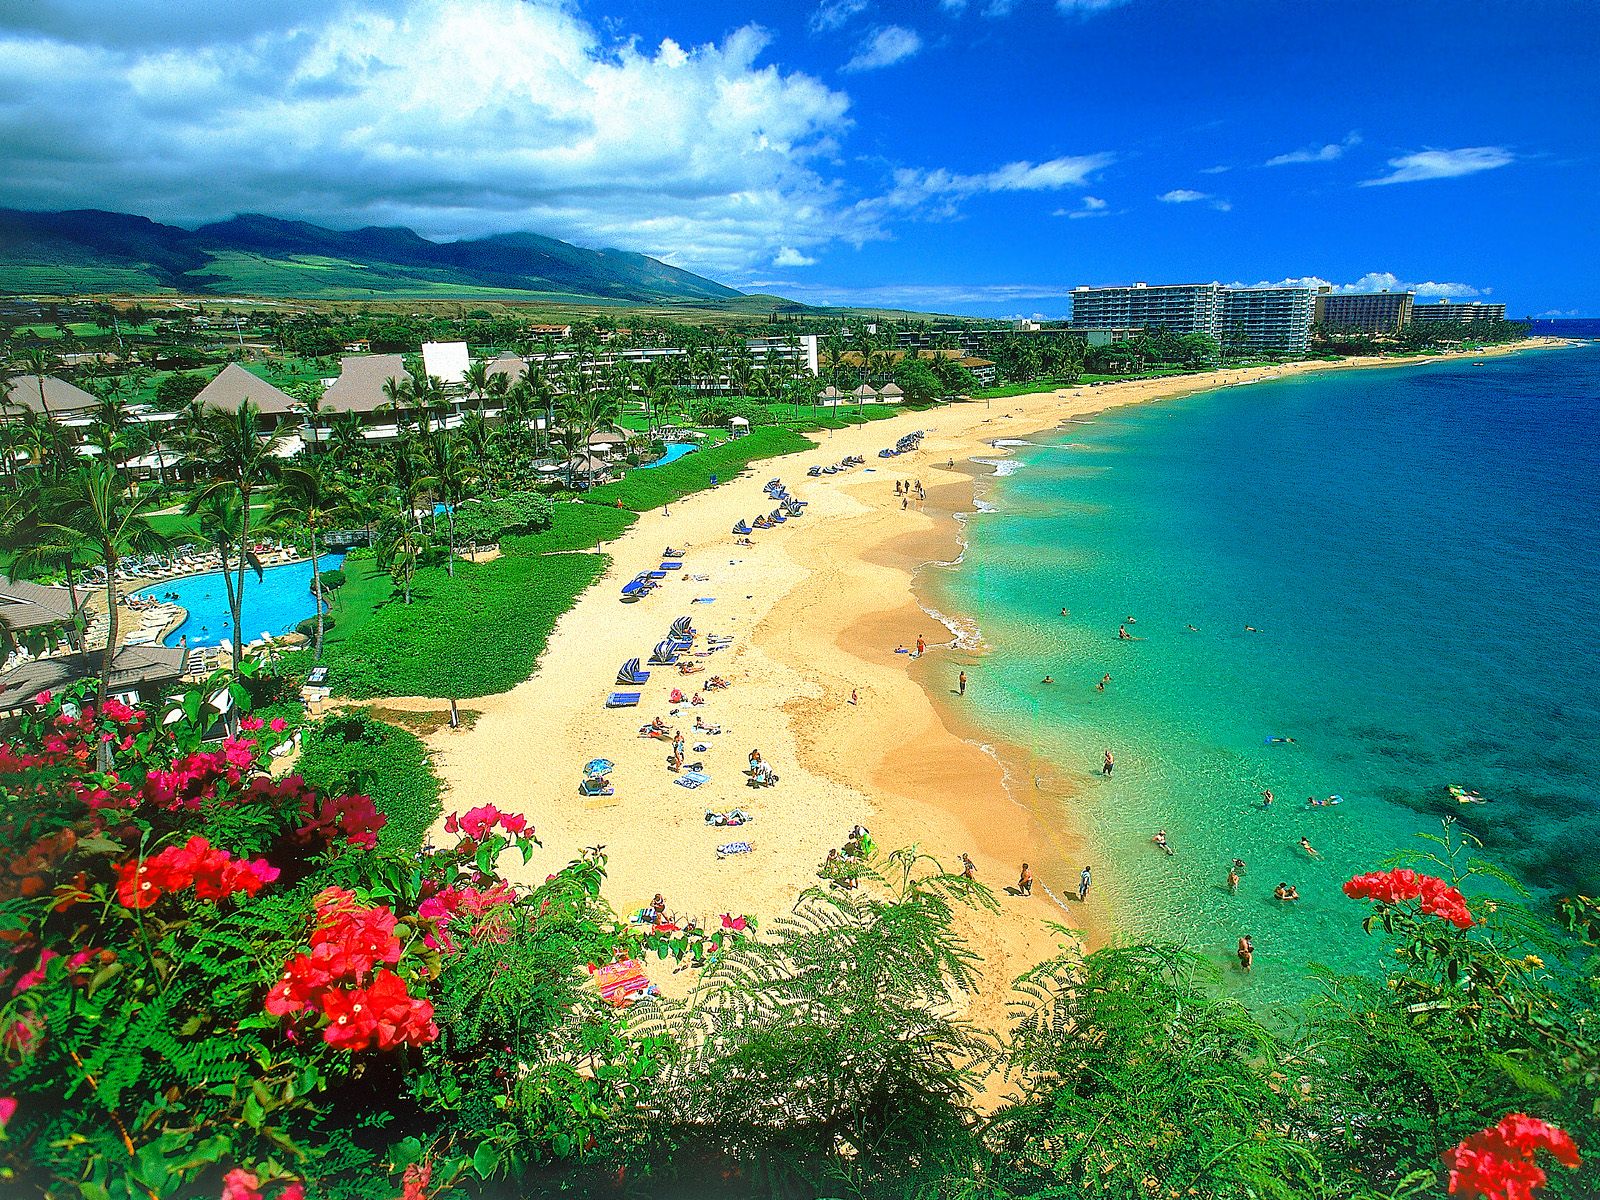 http://4.bp.blogspot.com/-xDvLwZRcjG8/UGd6A0CwtVI/AAAAAAAATHM/Yd_T4gQ7ocU/s1600/Kaanapali-Beach-Maui-Hawaii.jpg